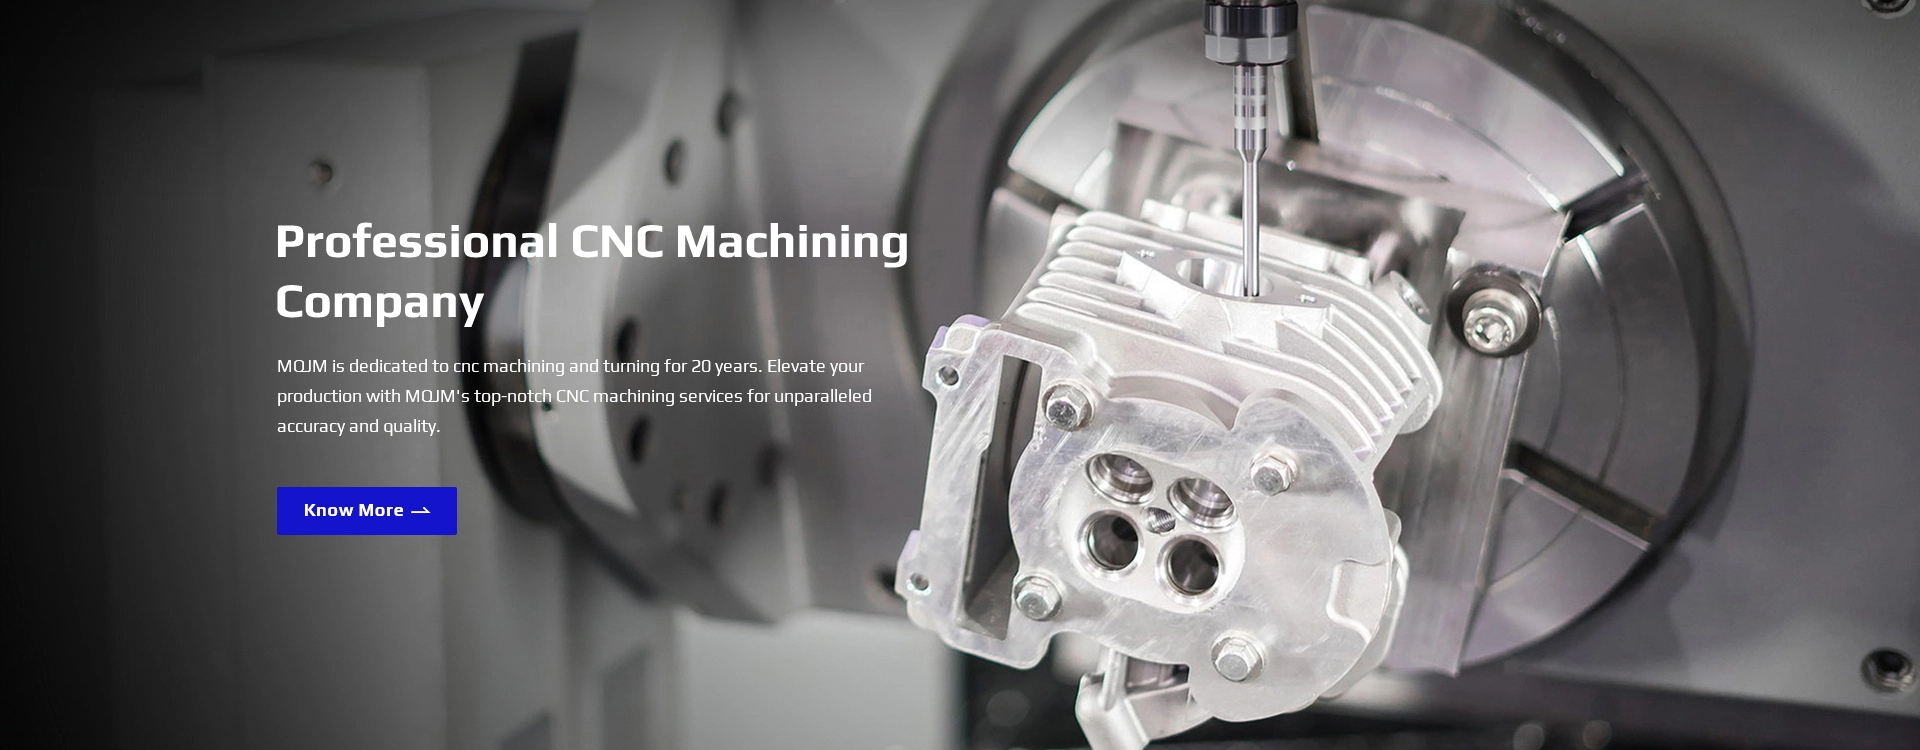 Professional CNC Machining Company